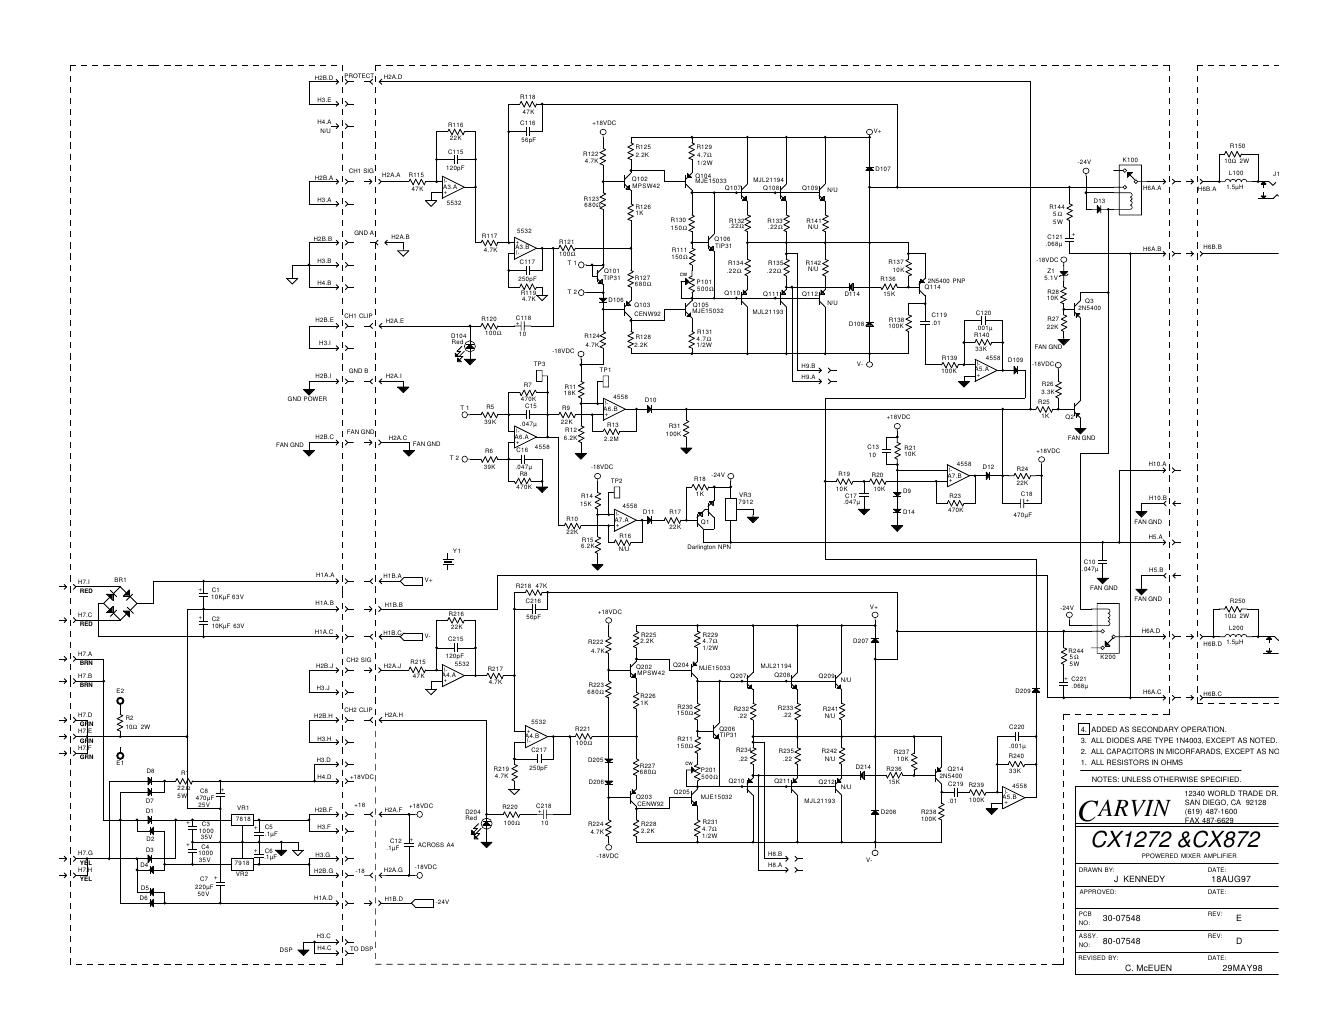 carvin cx 1272 cx 872 mixer power amp schematic